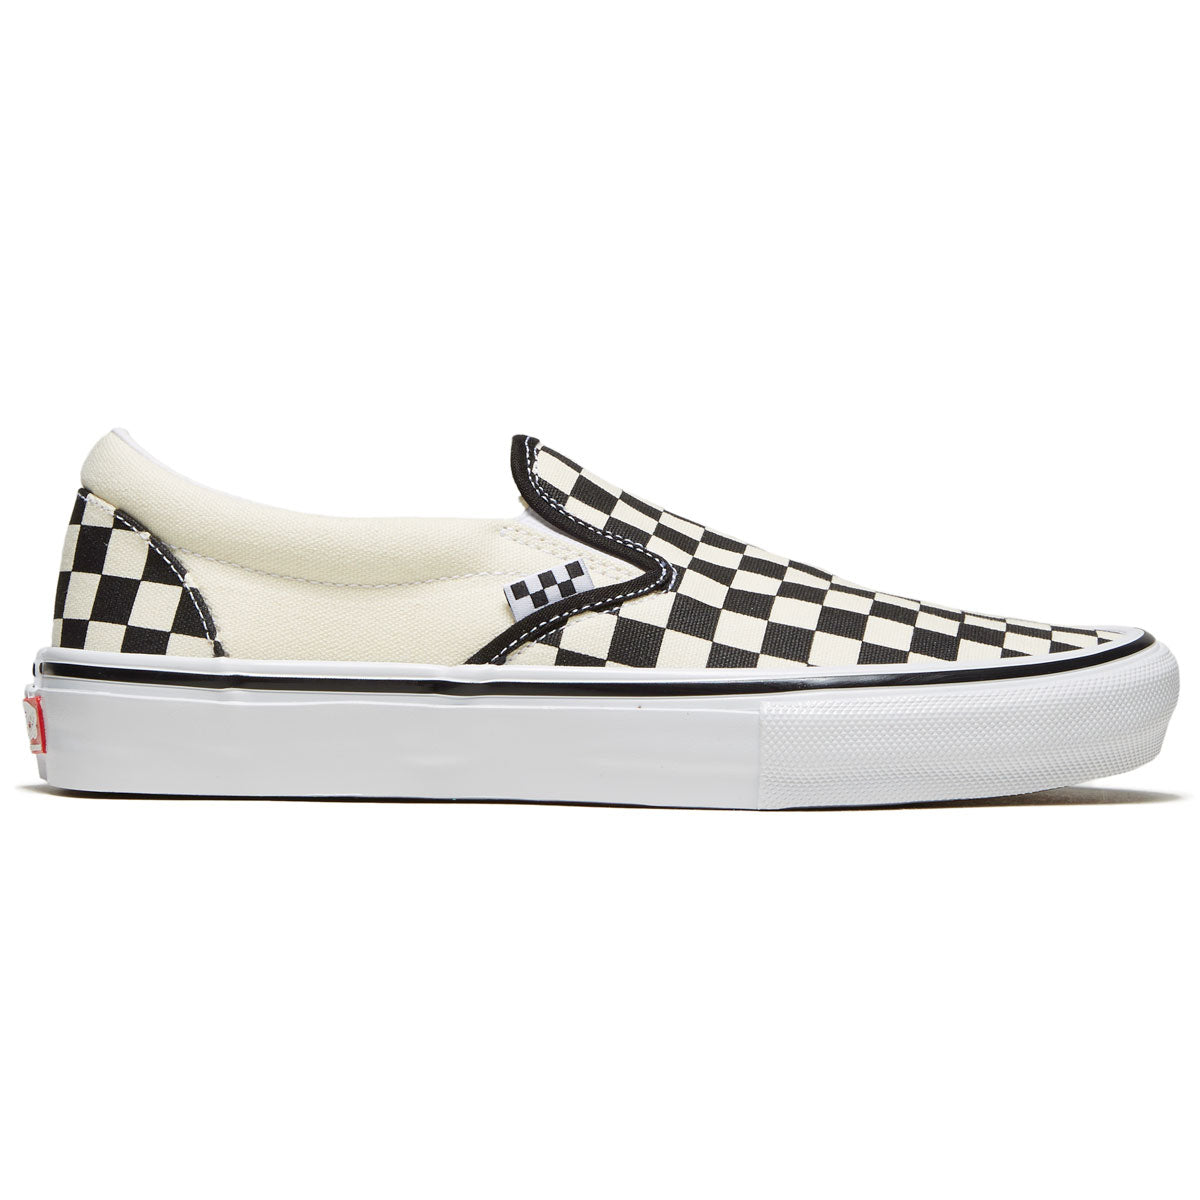 Vans Skate Slip-on Shoes - Checkerboard Black/Off White image 1